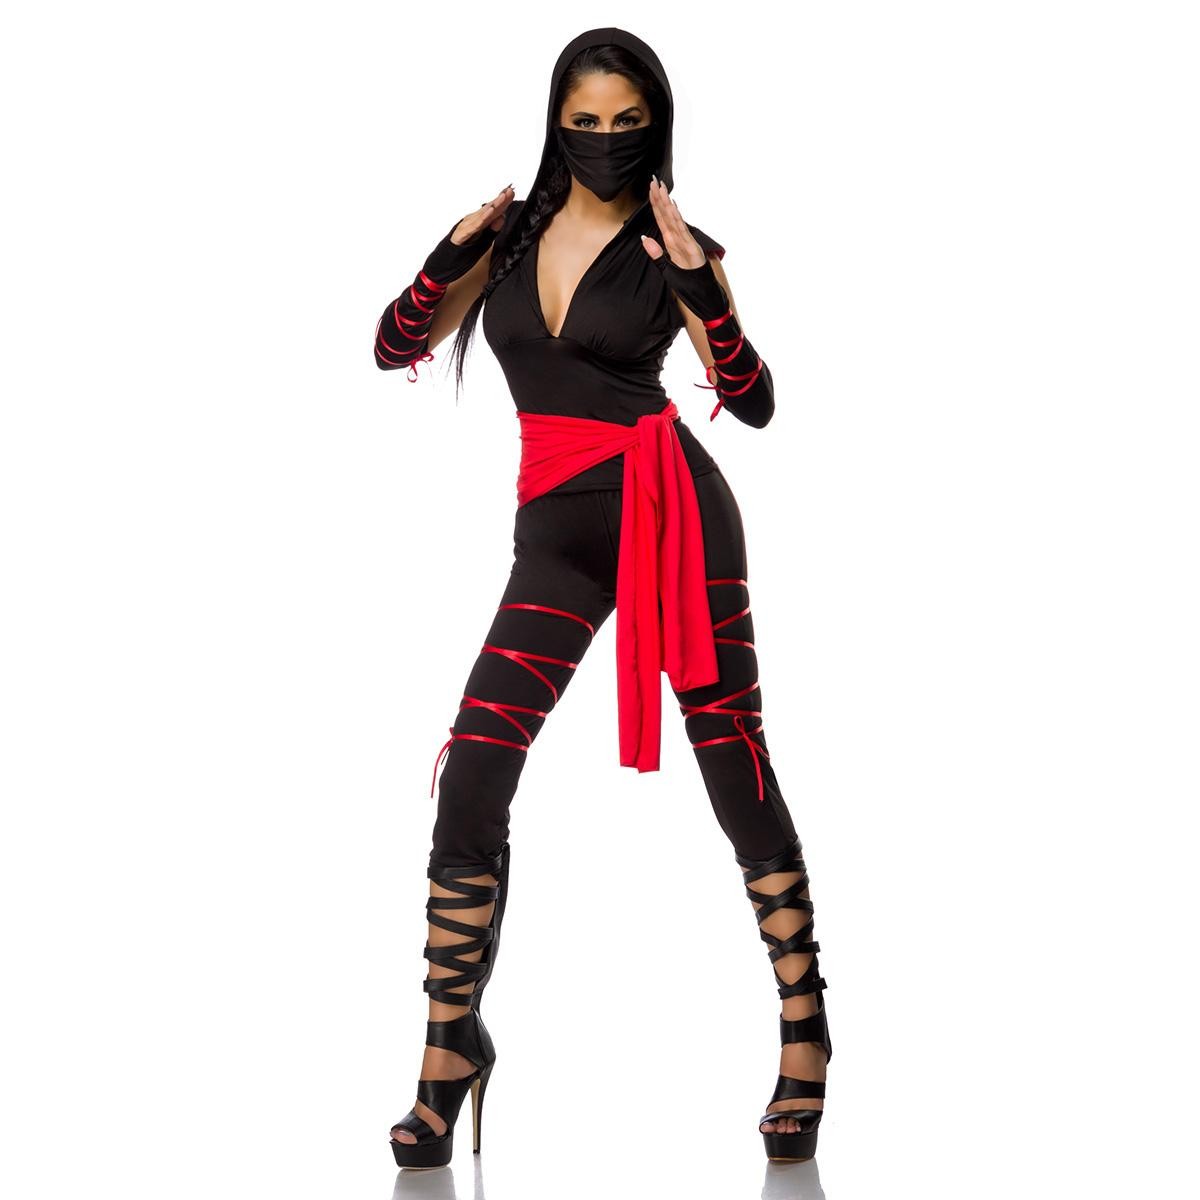  heißes  Ninja-Outfit  -  schwarz/rot 